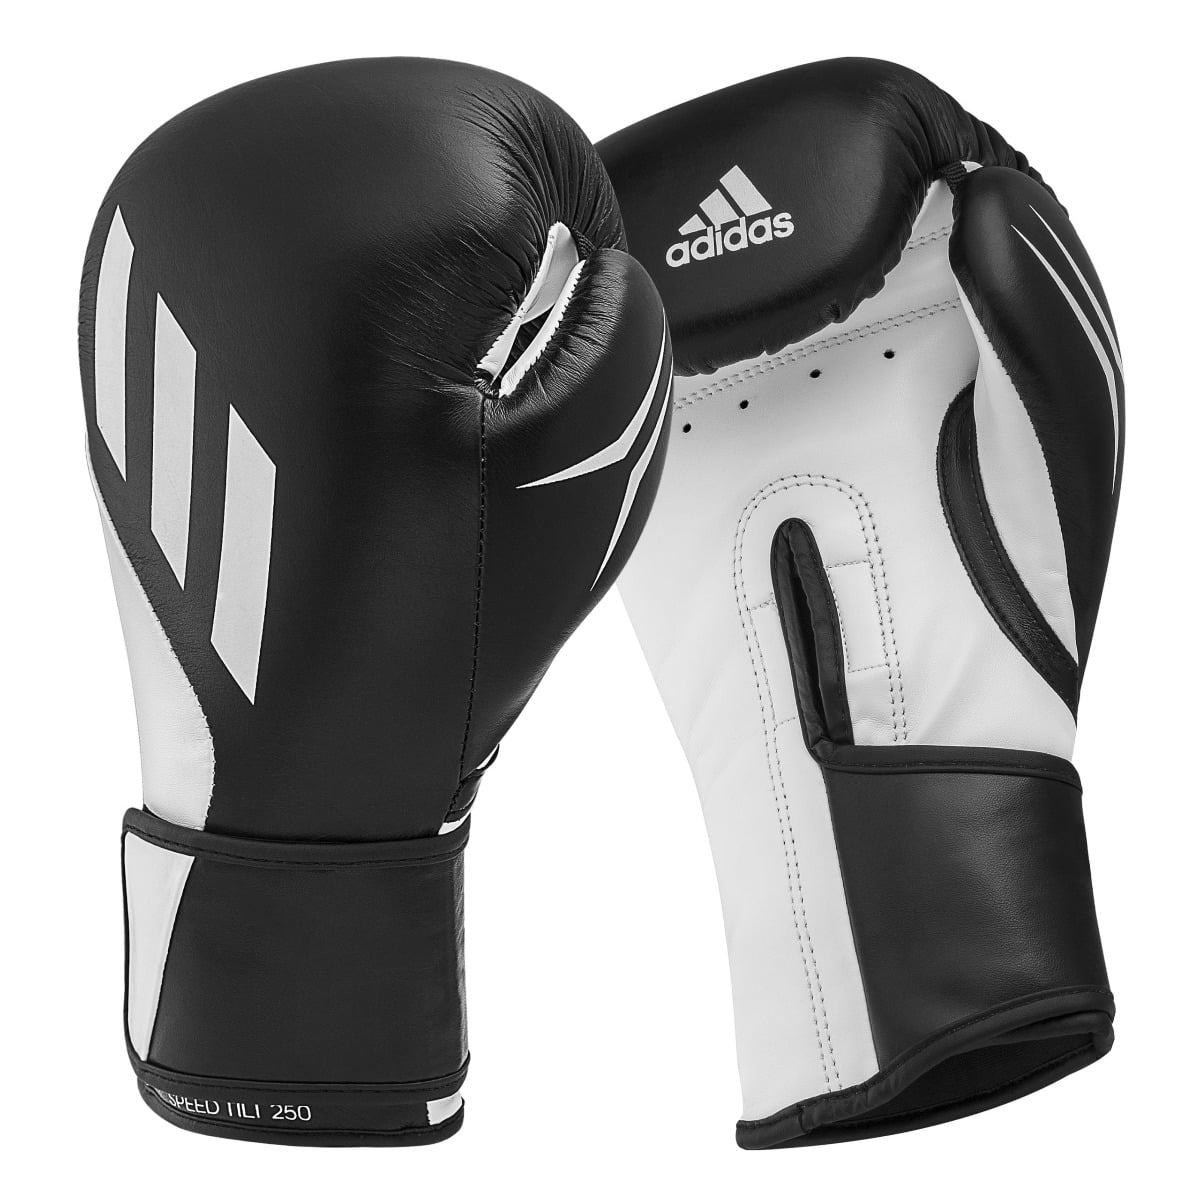 Usnjene boksarske rokavice ''Adidas SPEED 250 TILT black'' - NOVO!!!